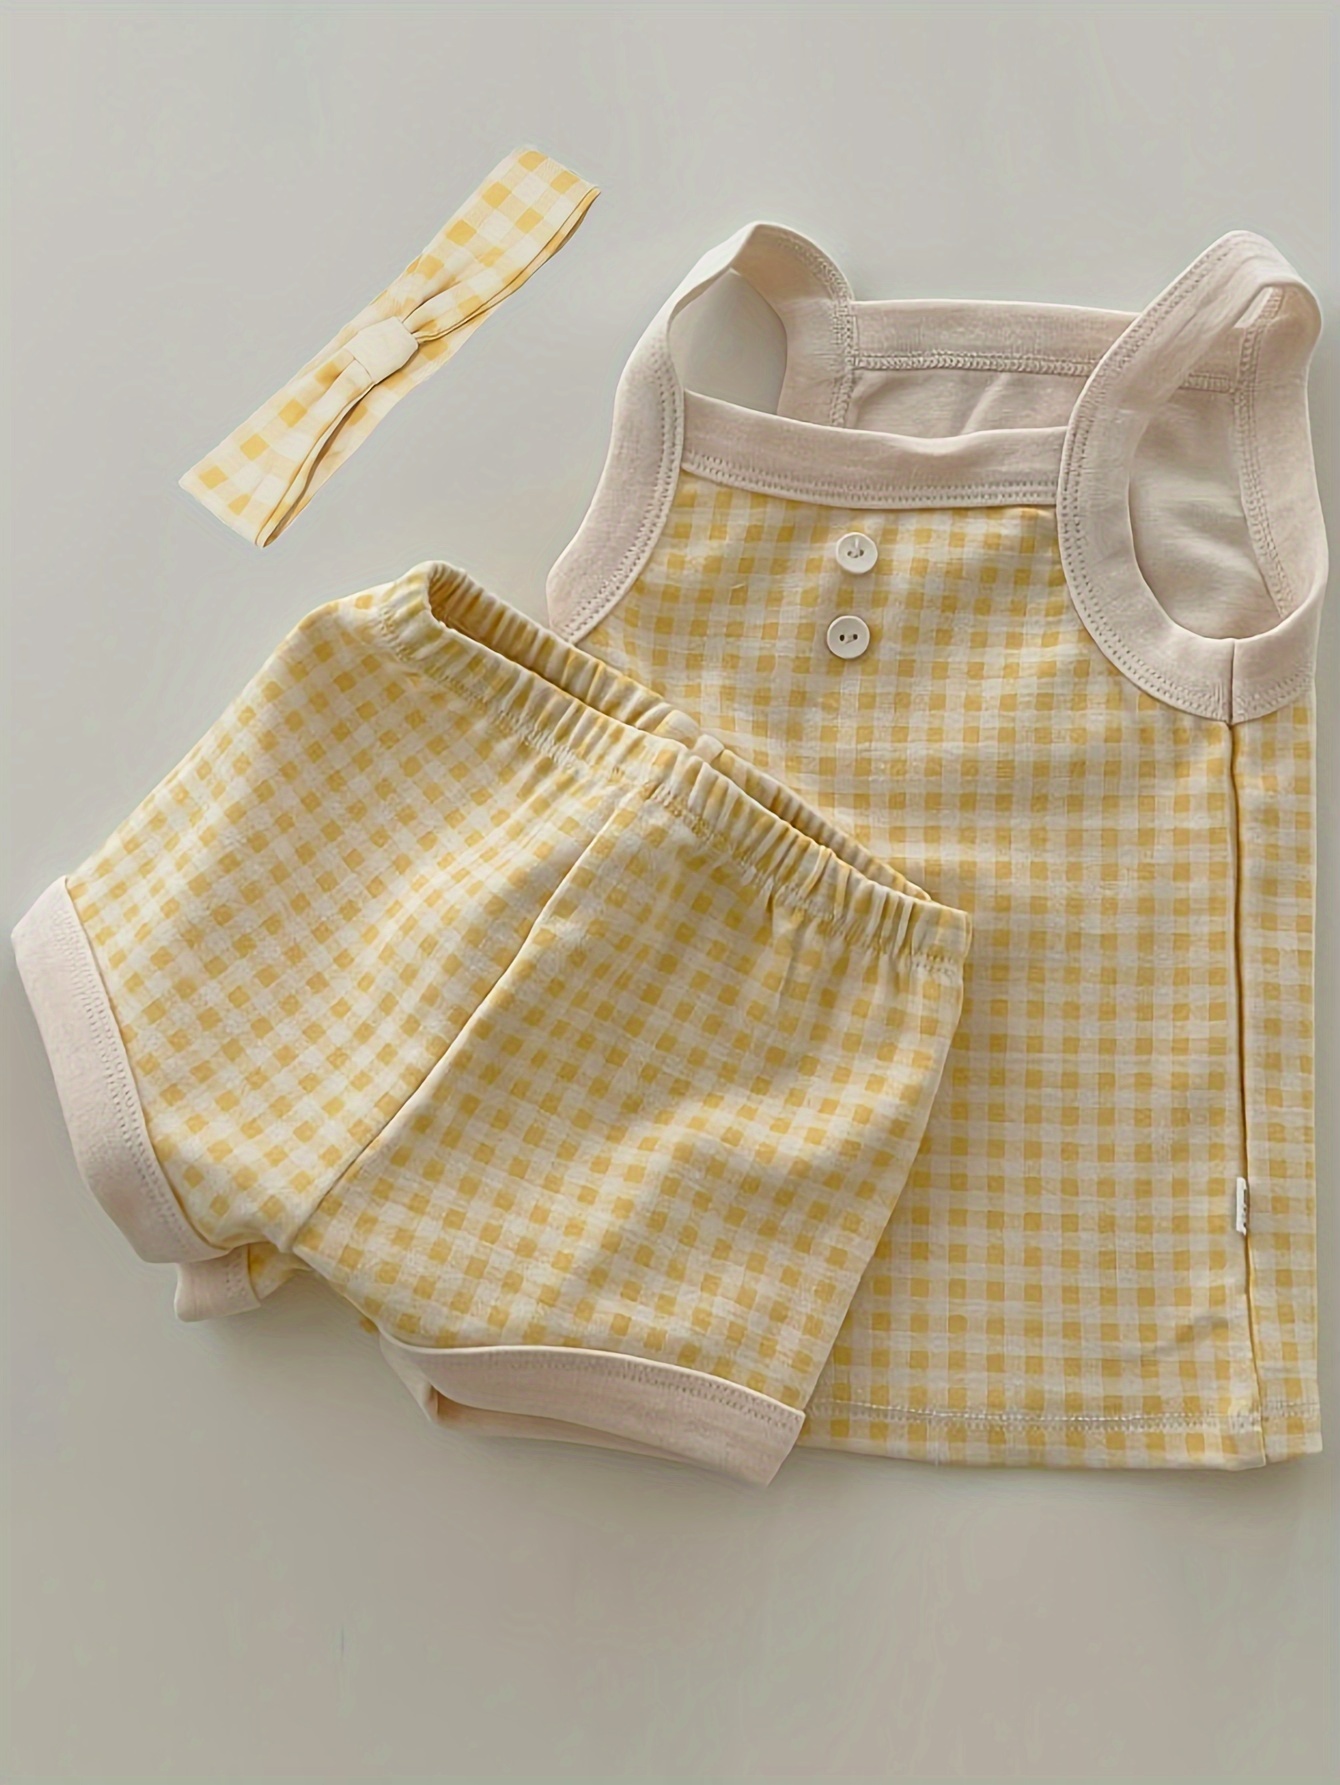 AliExpress Wholesale Baby Girl Bows Bobbers Set Short Sleeves Shirt Fishing Shorts Toddler Bummie Clothes